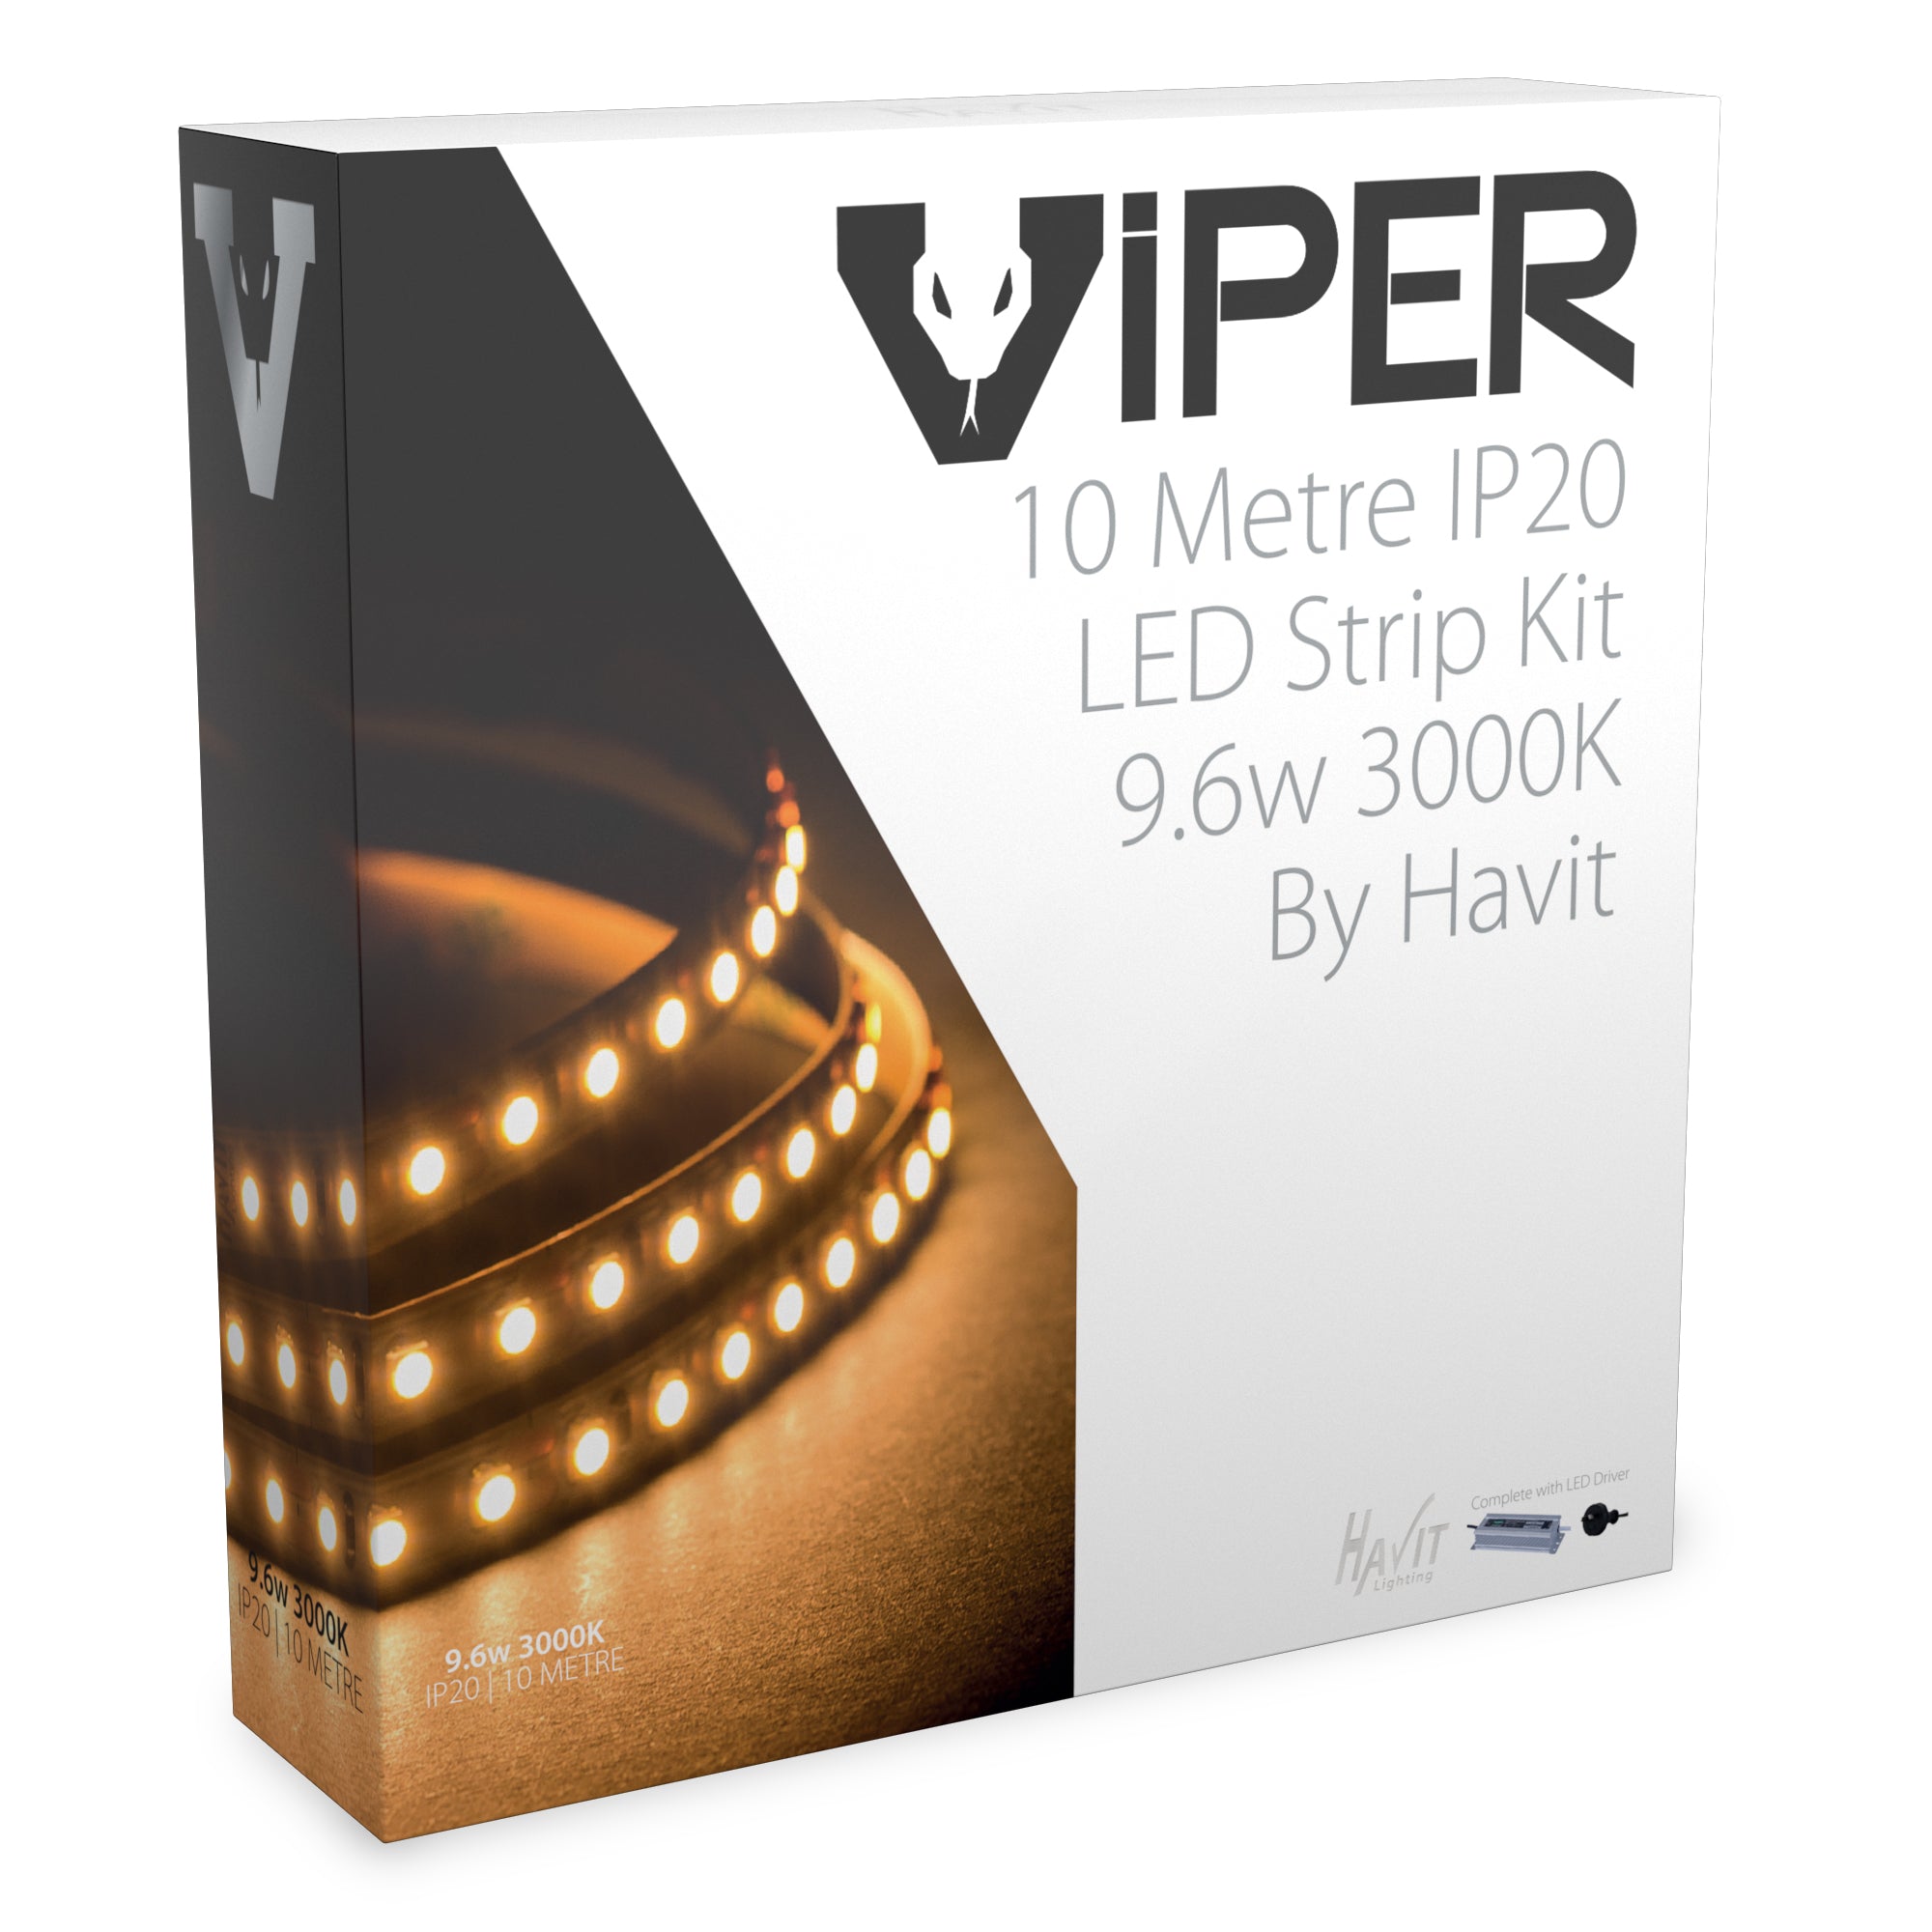 VPR9743IP20-120-10M - VIPER 9.6w 10m LED Strip kit 3000k